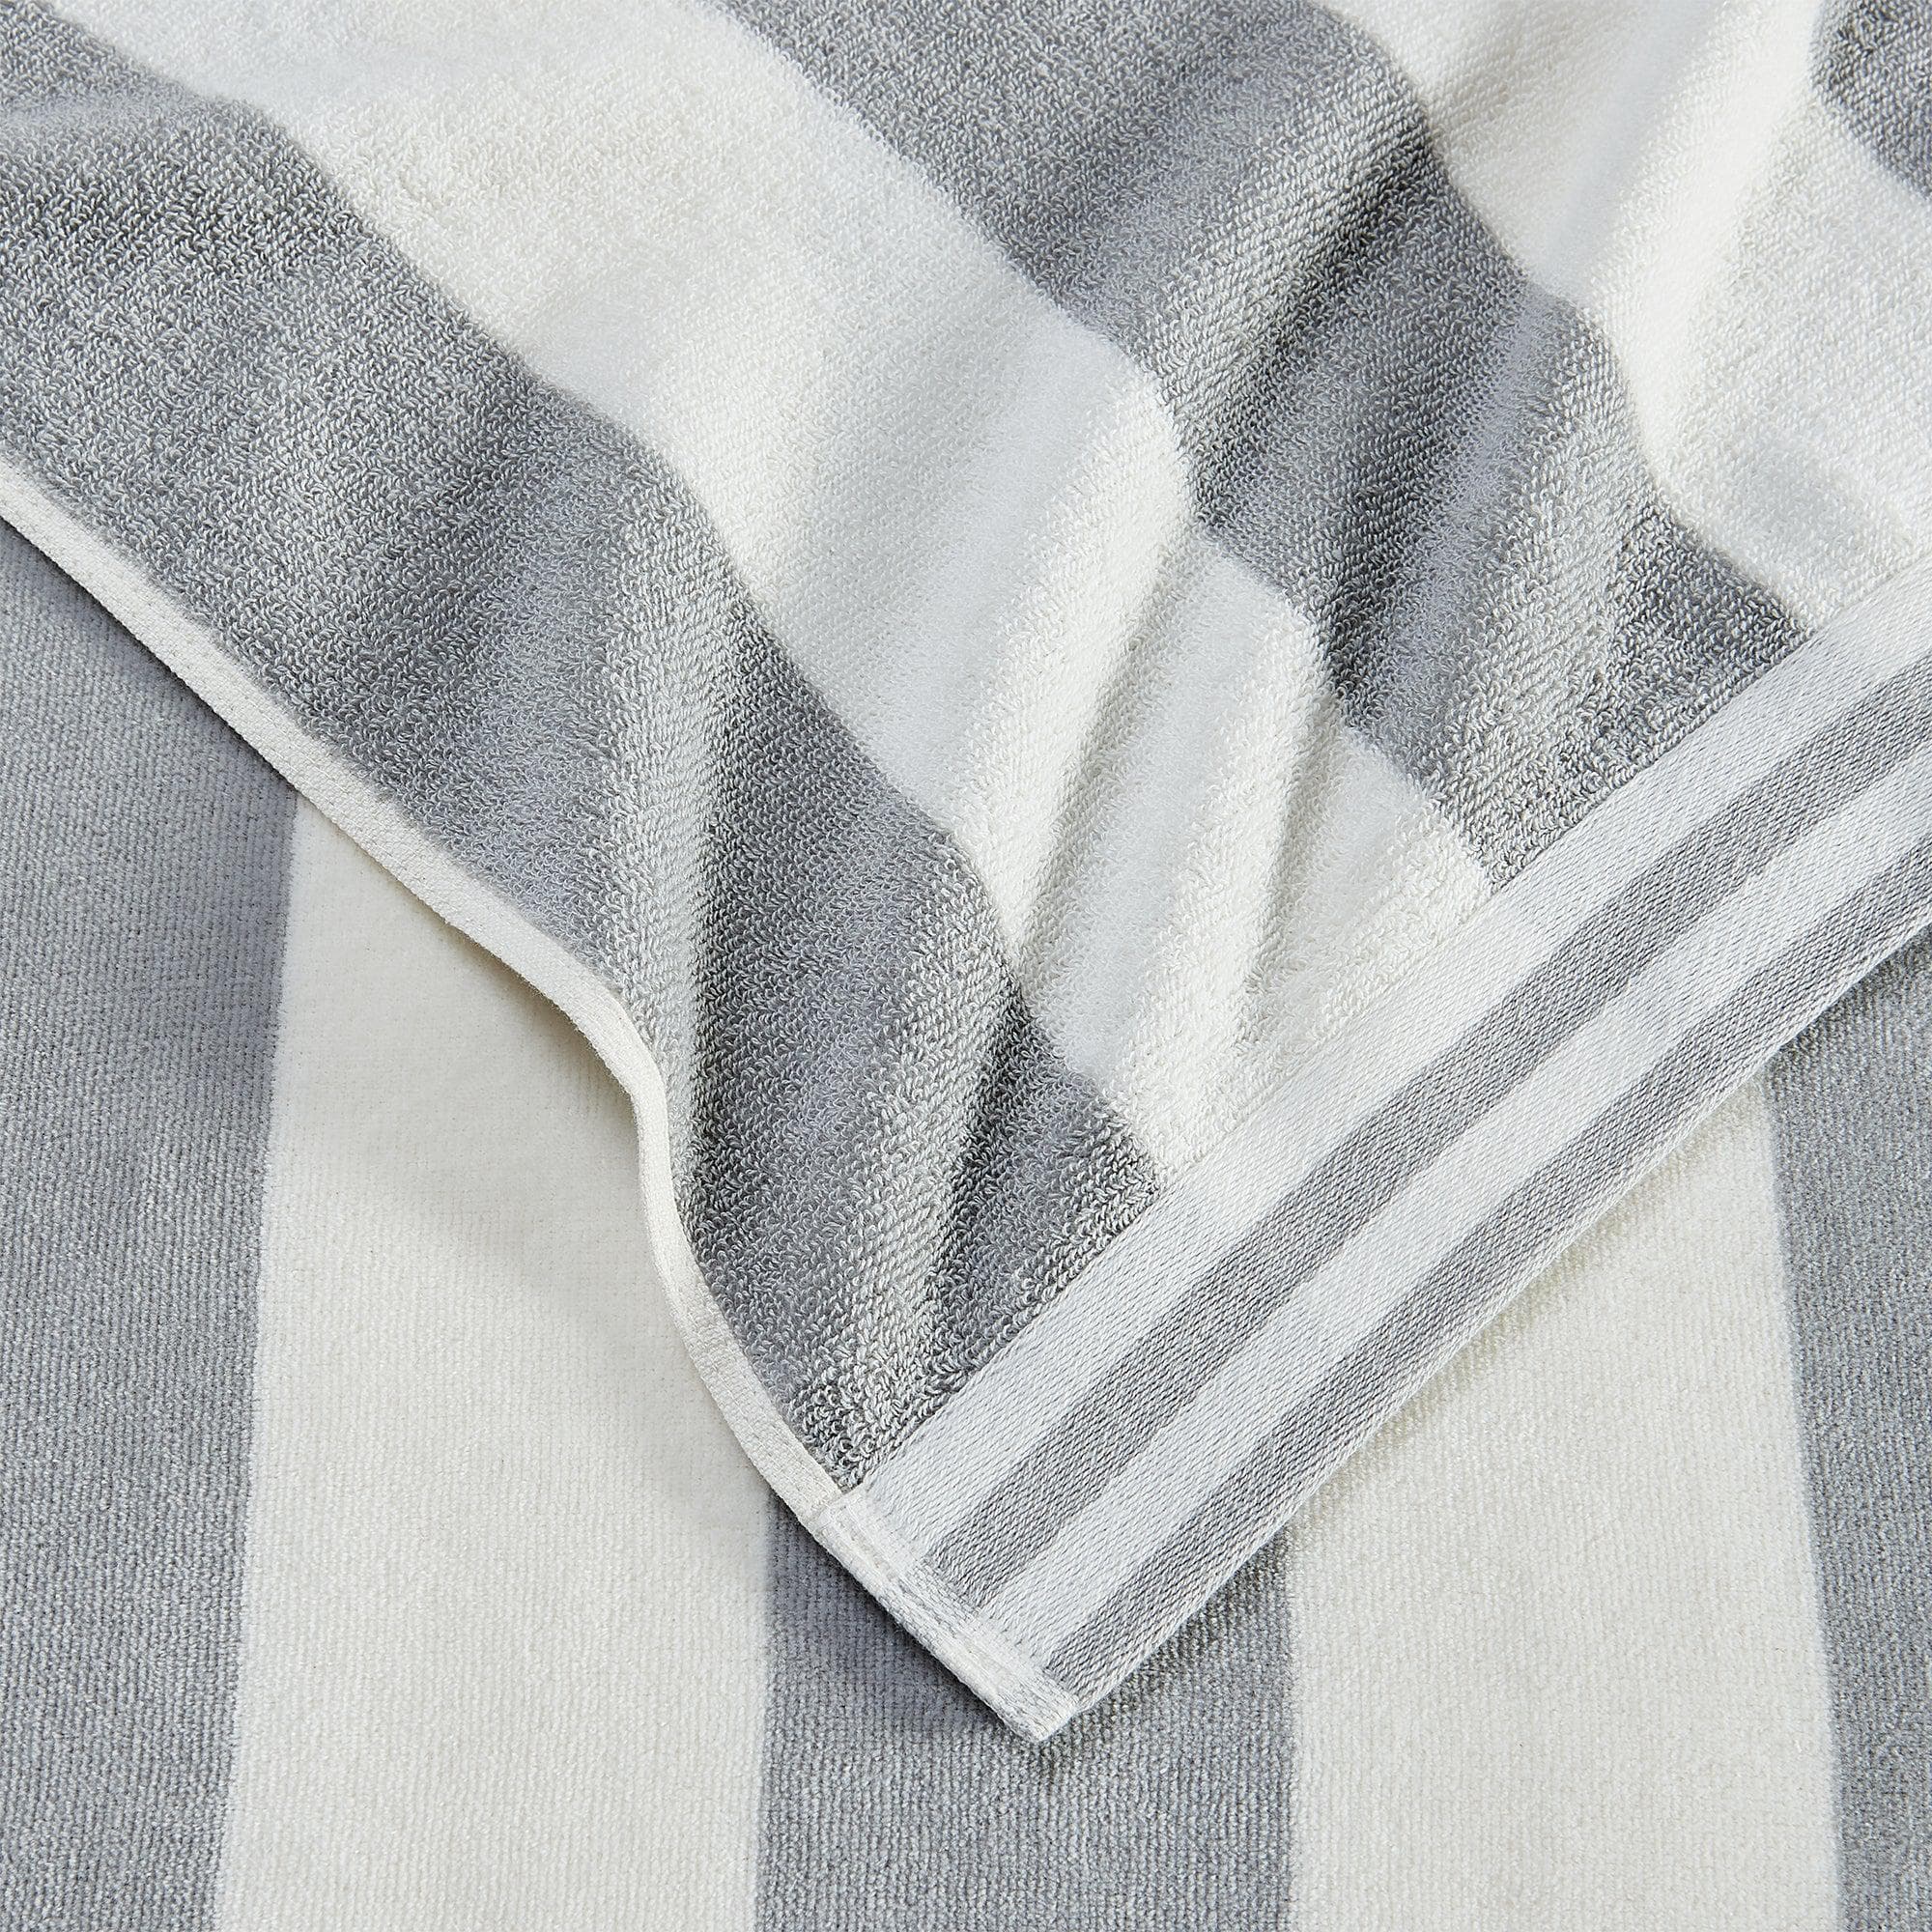 Dark Grey Beach Striped Towel